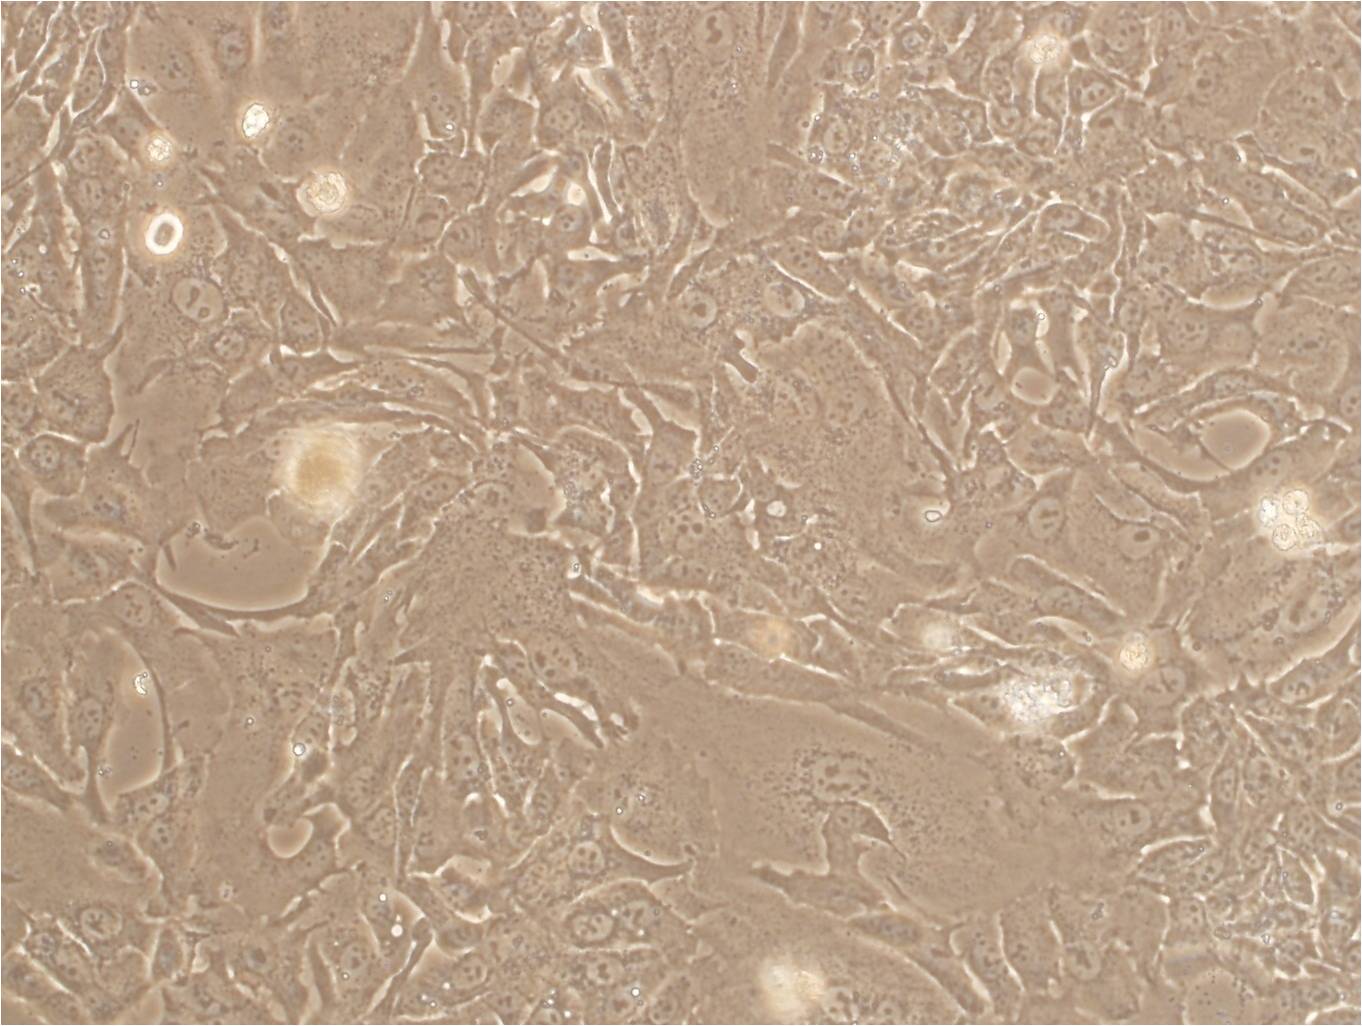 NCI-H526:人肺癌复苏细胞(提供STR鉴定图谱),NCI-H526